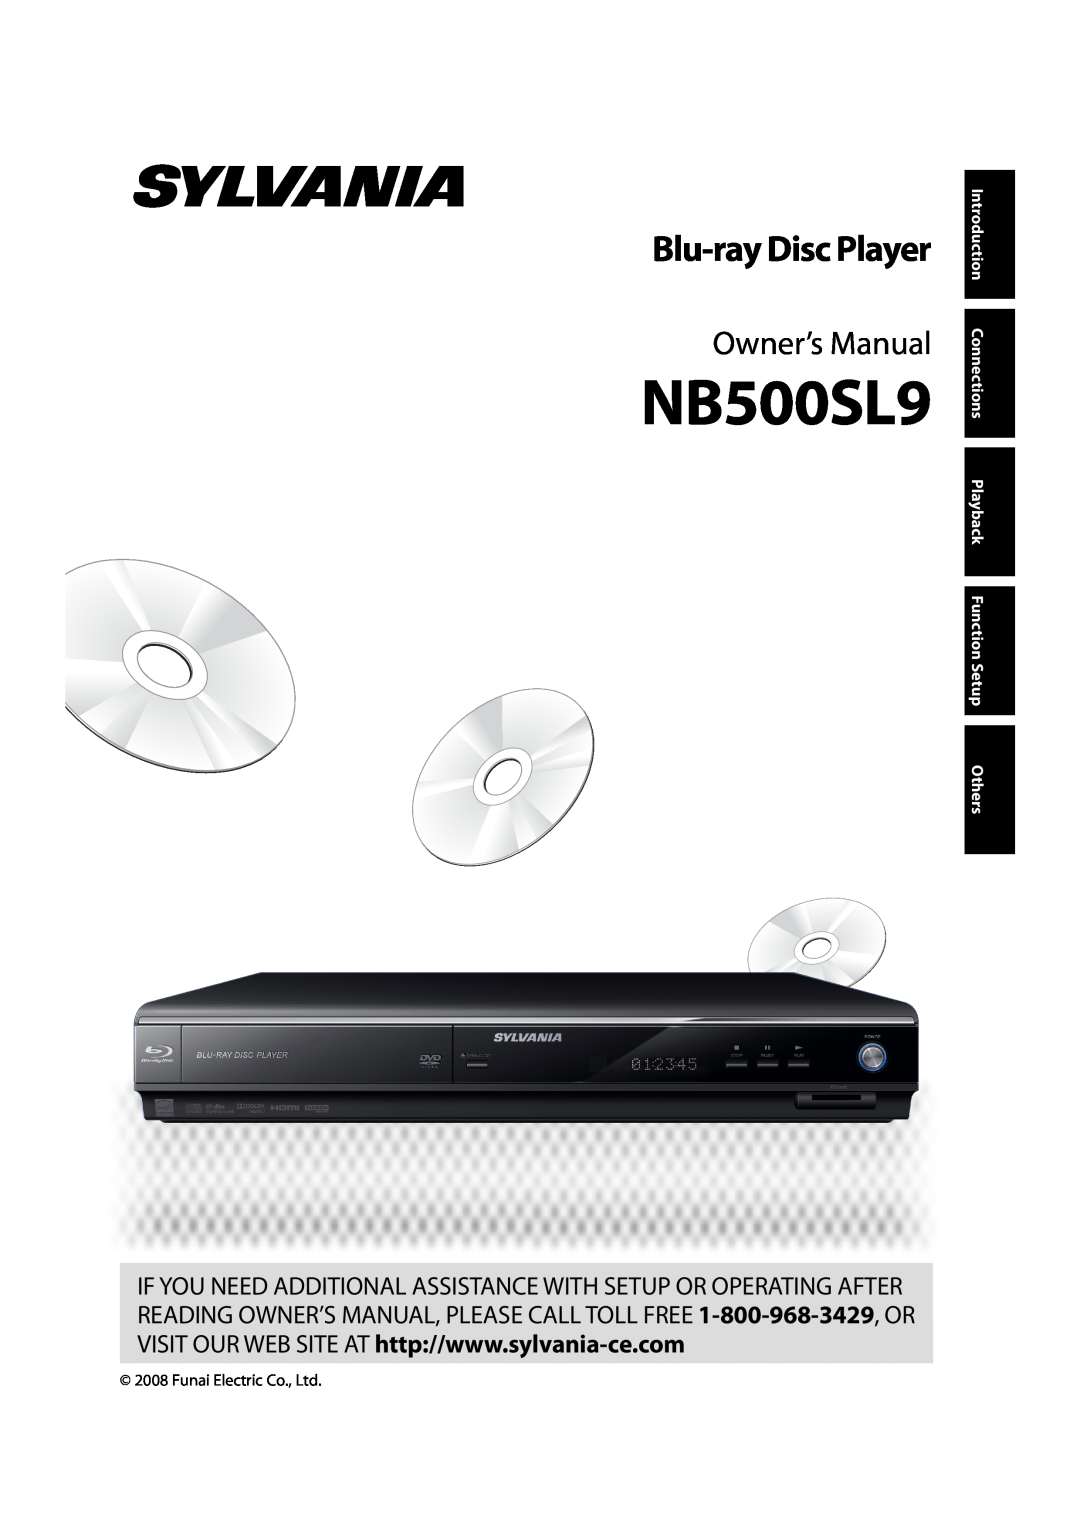 Sylvania NB500SL9 owner manual Owner’s Manual, Blu-ray Disc Player 